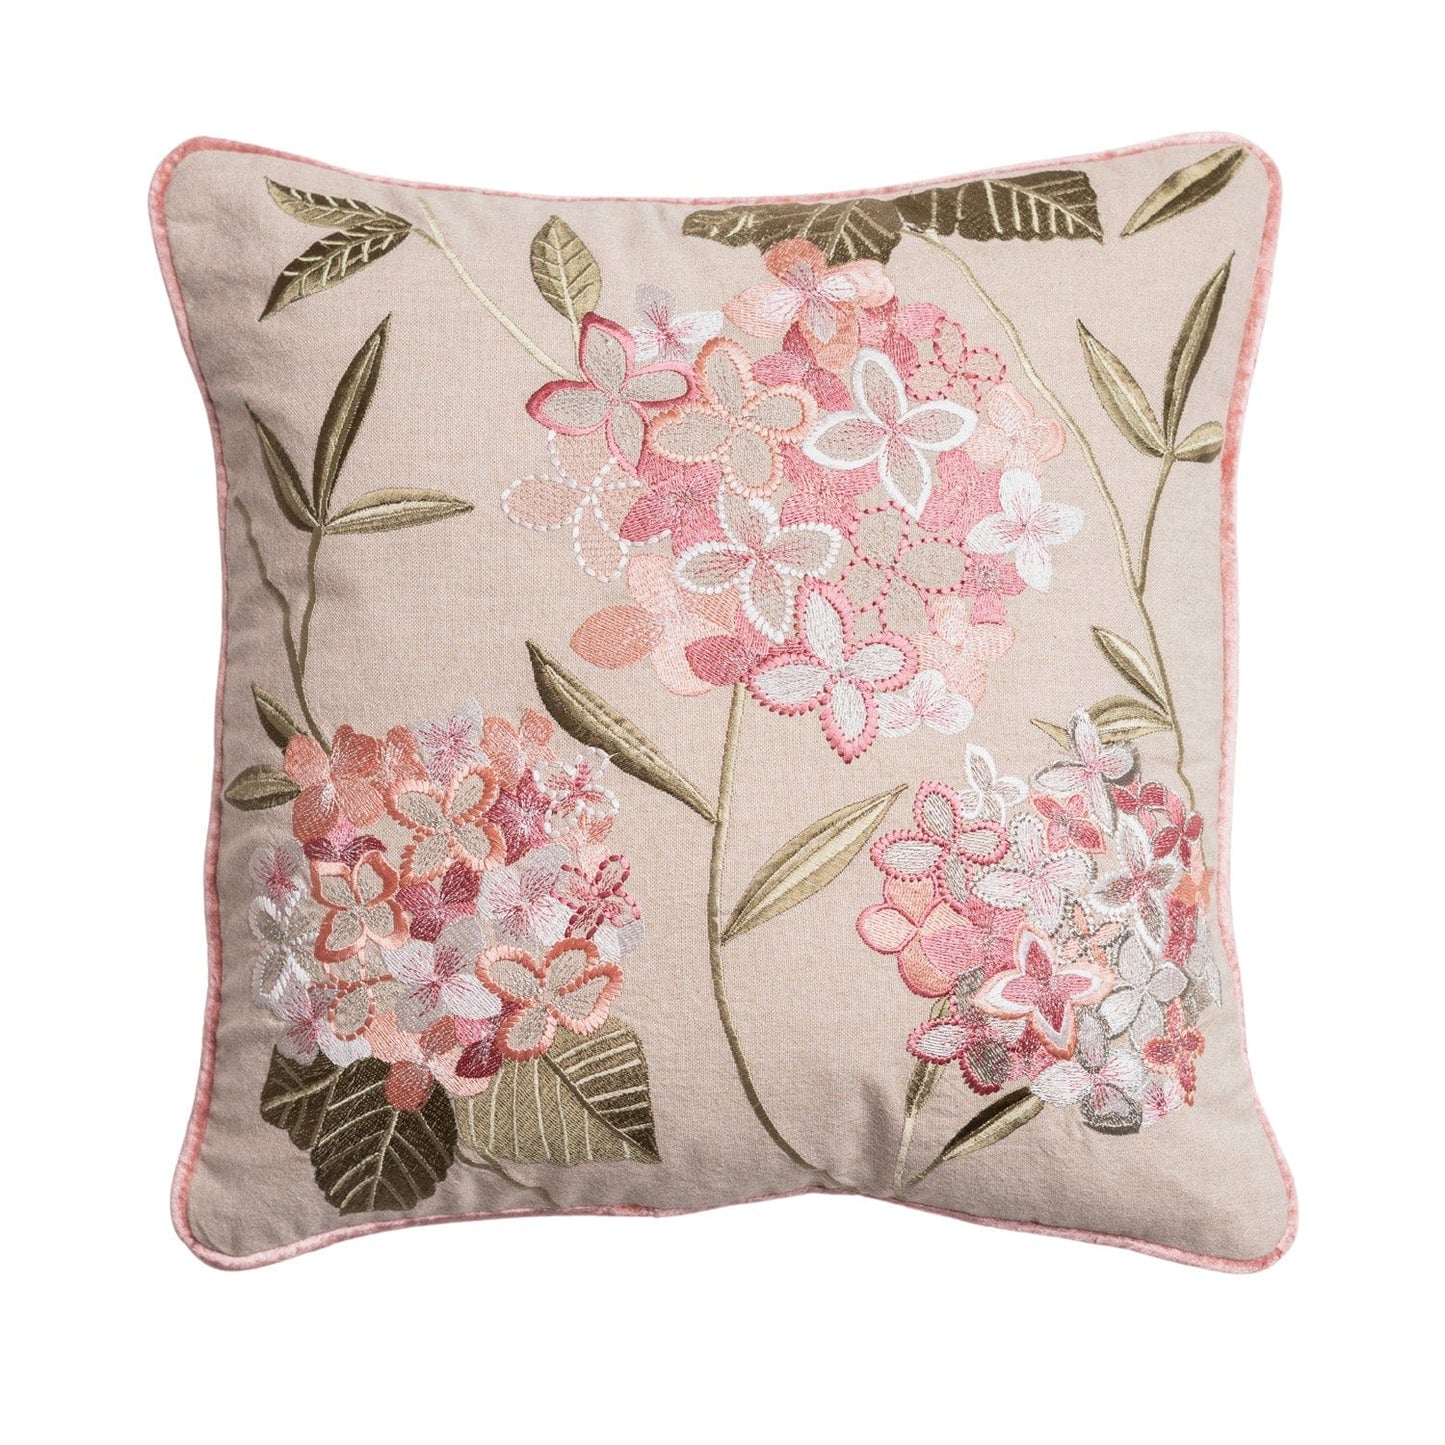 Embroidered Decorative Cushion Cover, Hydrangea